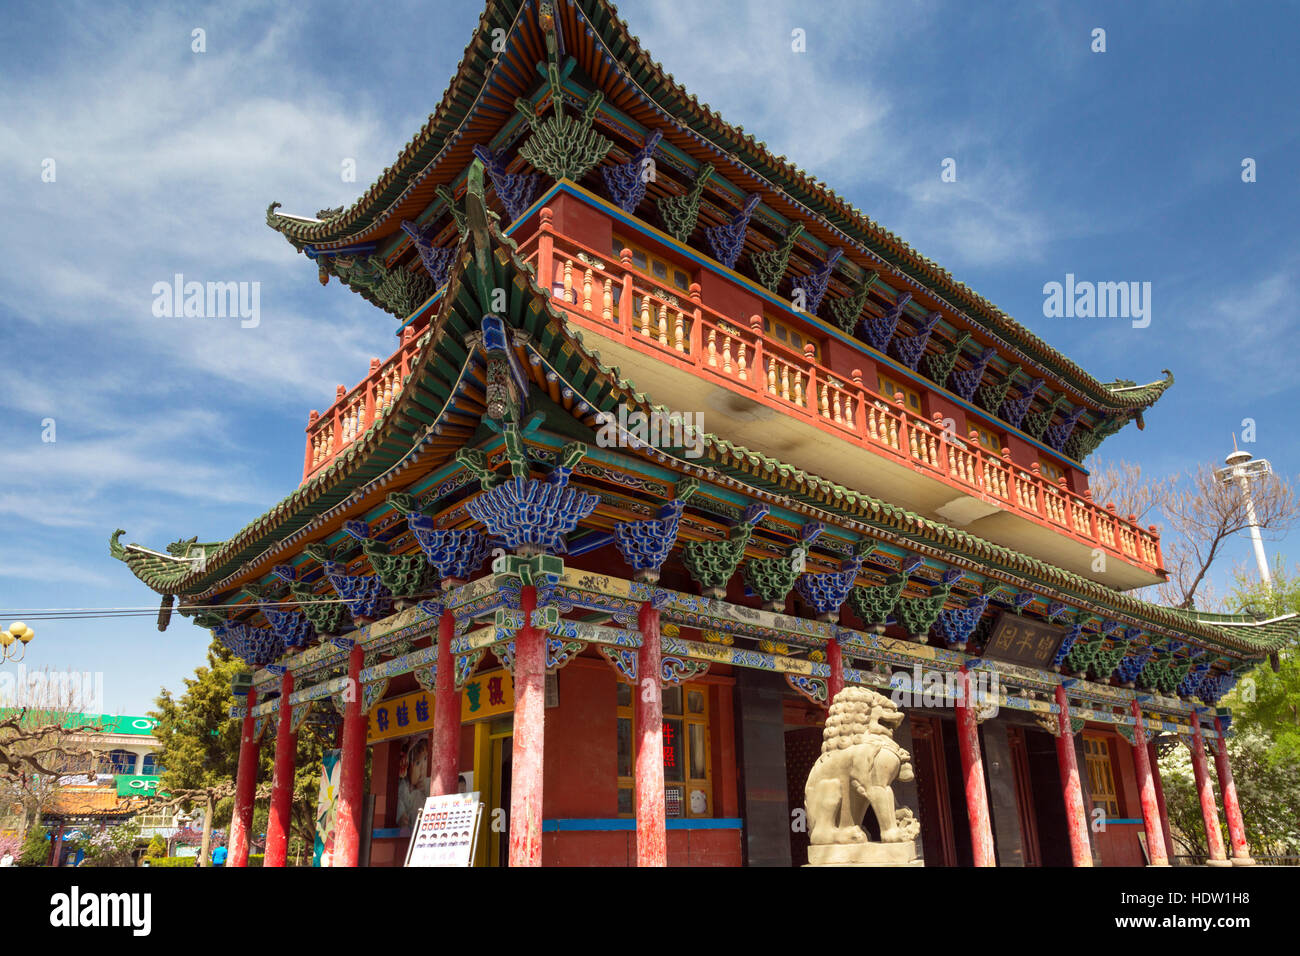 Chinese pavilion in city centre, Wuzhong, Ningxia, China Stock Photo